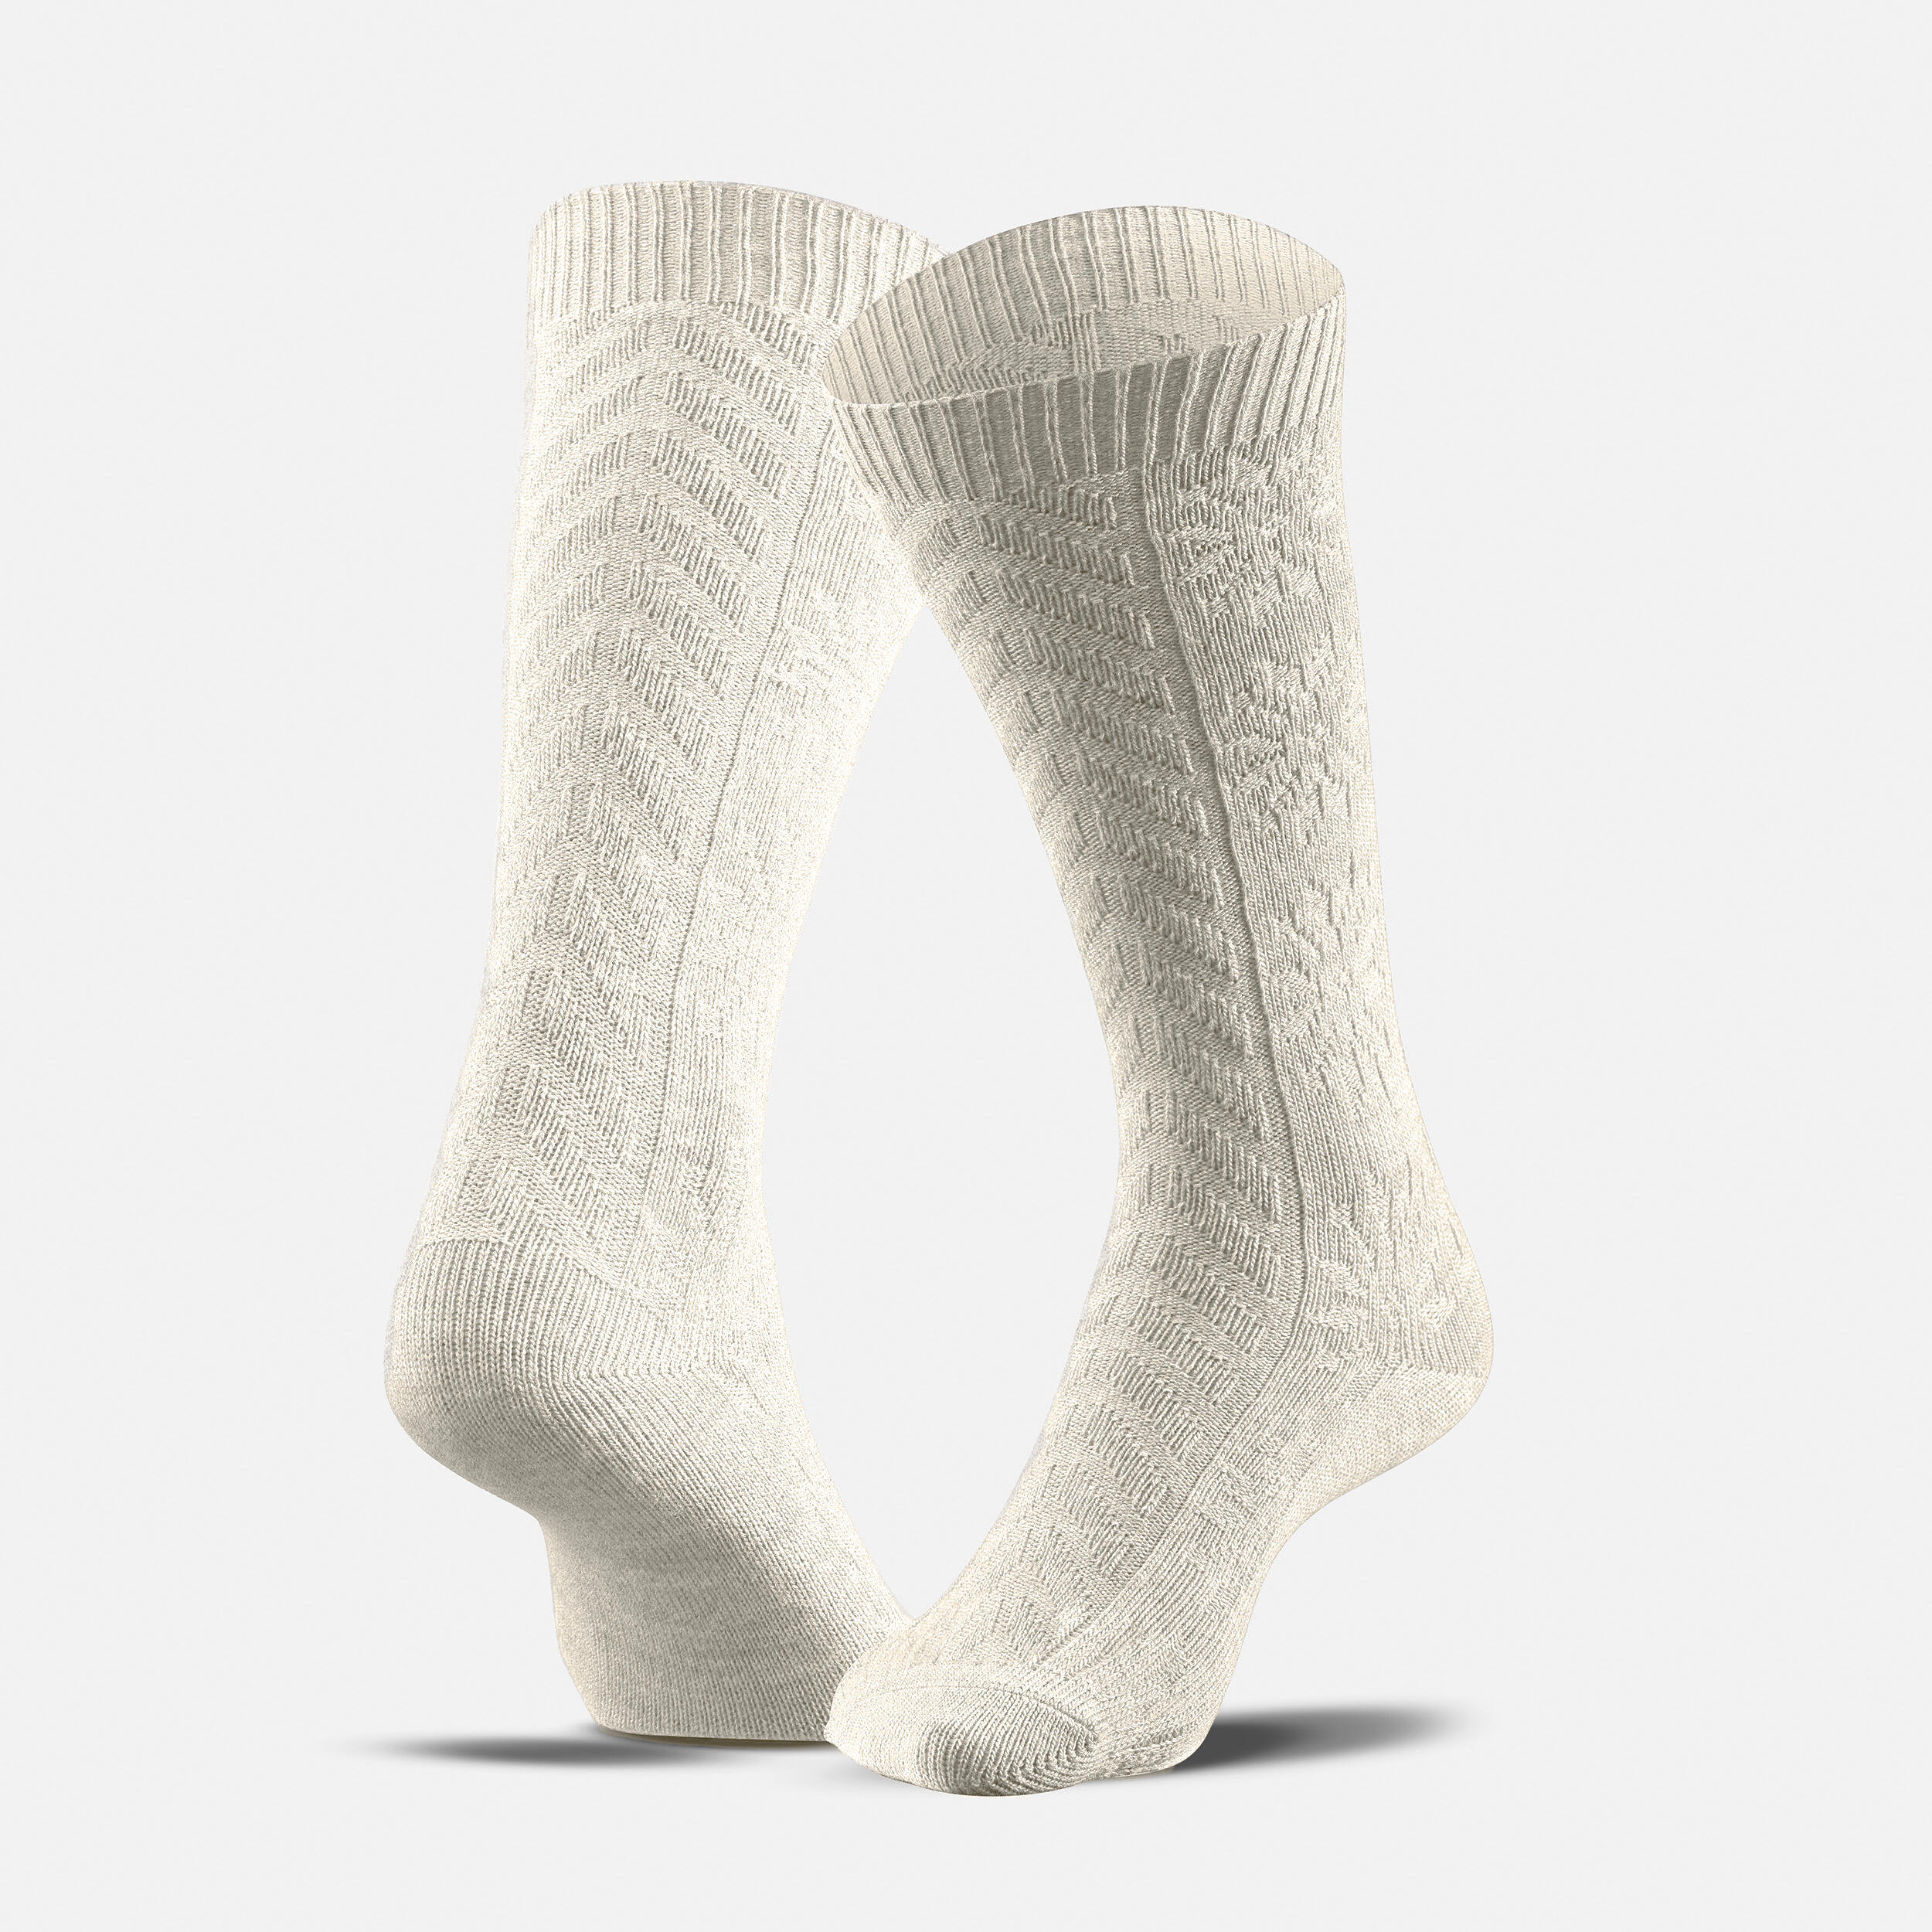 Warm hiking socks - SH100 MID JACQUARD - 2 pairs 2/10